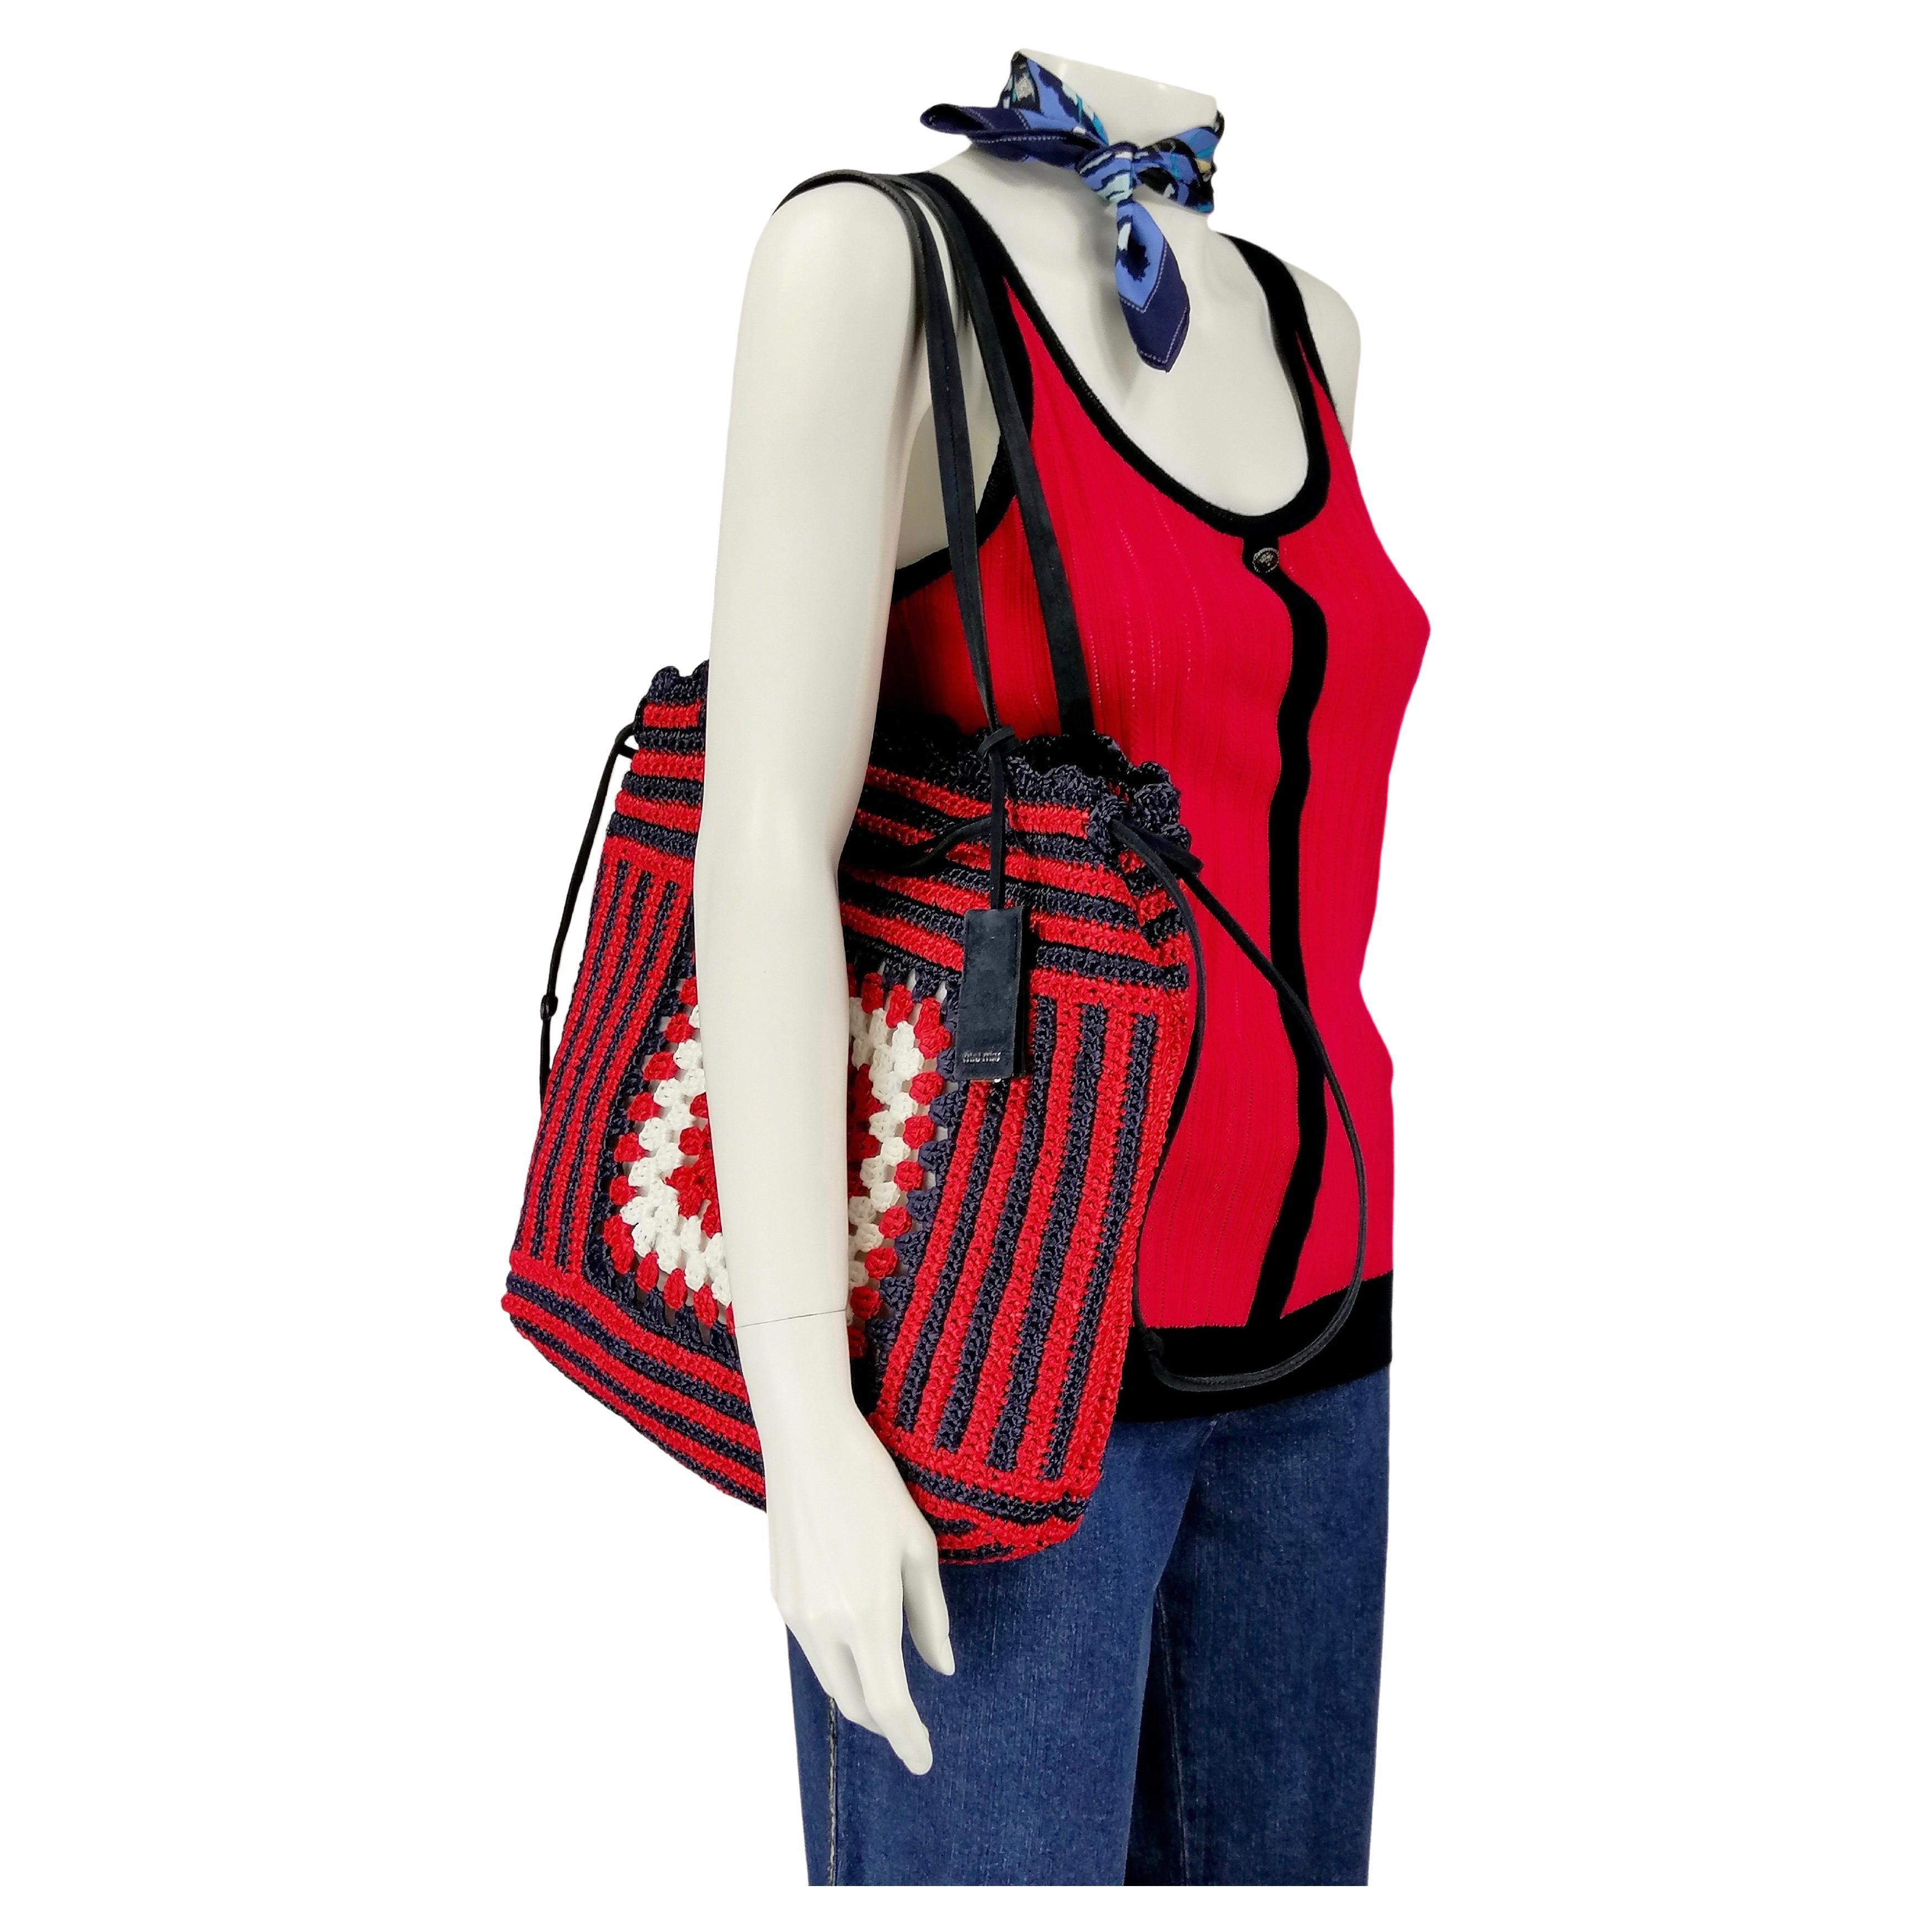 MIUMIU shoulder bag
 rafia crochet red, navy, white
Details navy suede
Measures:
Width cm. 35
Hight cm. 32
Depth cm. 10
Shoulders cm. 26
Very good condition
